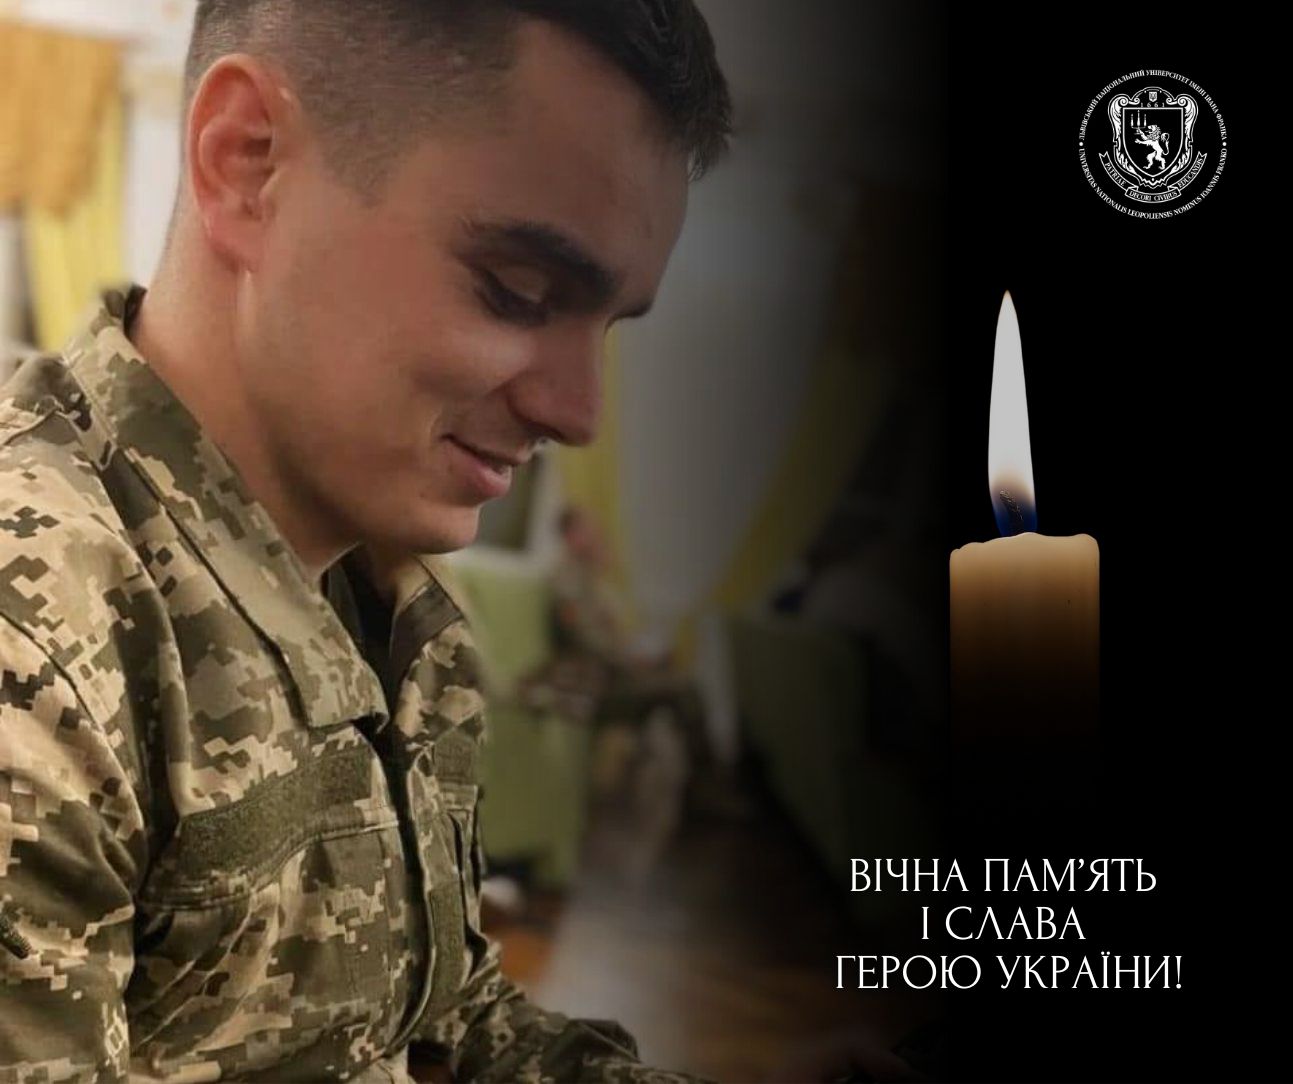 Захищаючи Україну, загинув студент Університету Дмитро Пащук